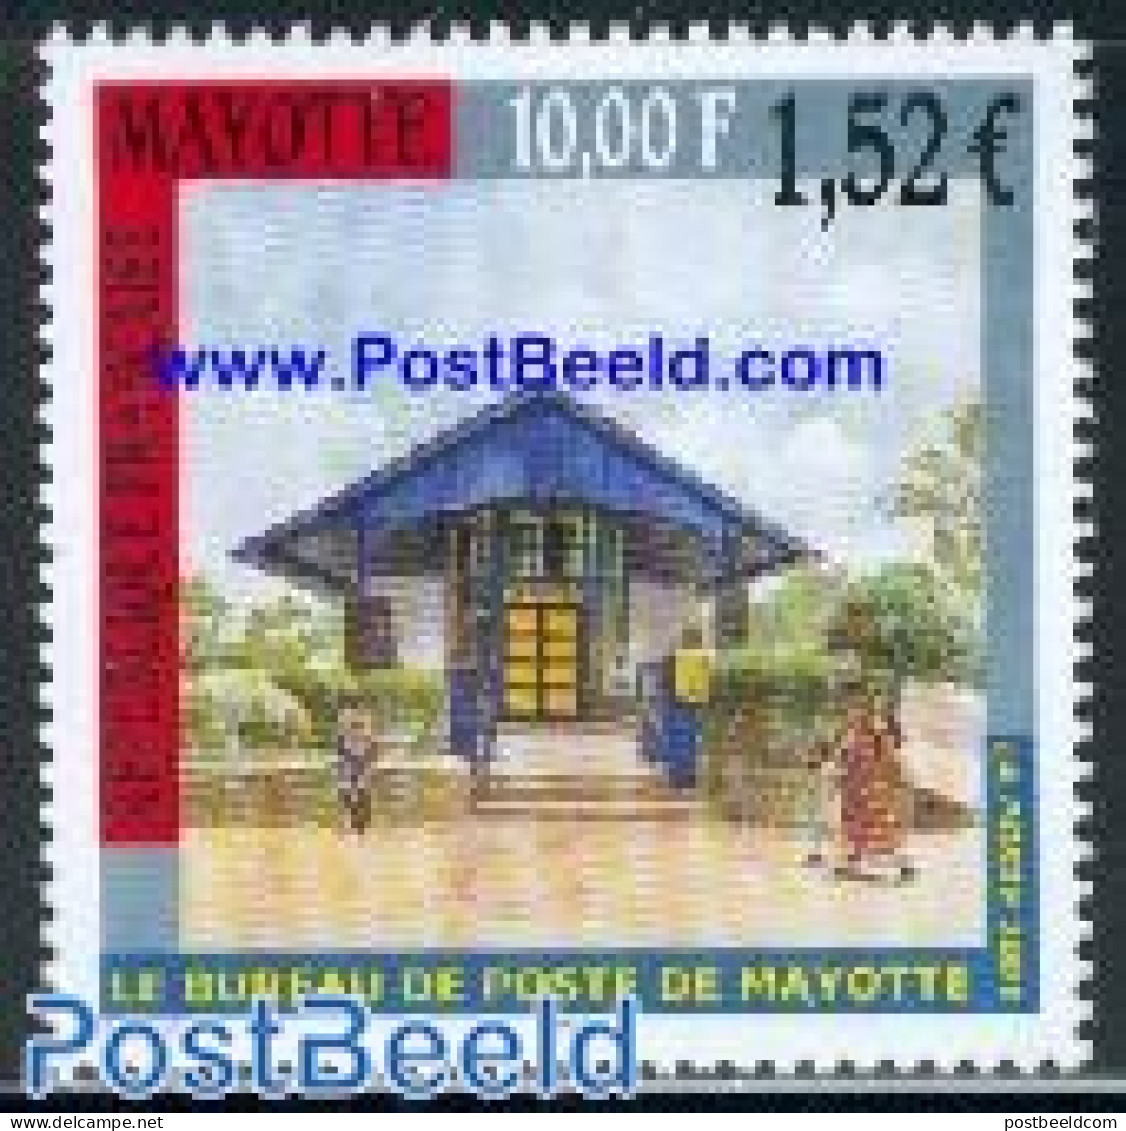 Mayotte 2001 Post Office 1v, Mint NH, Post - Poste